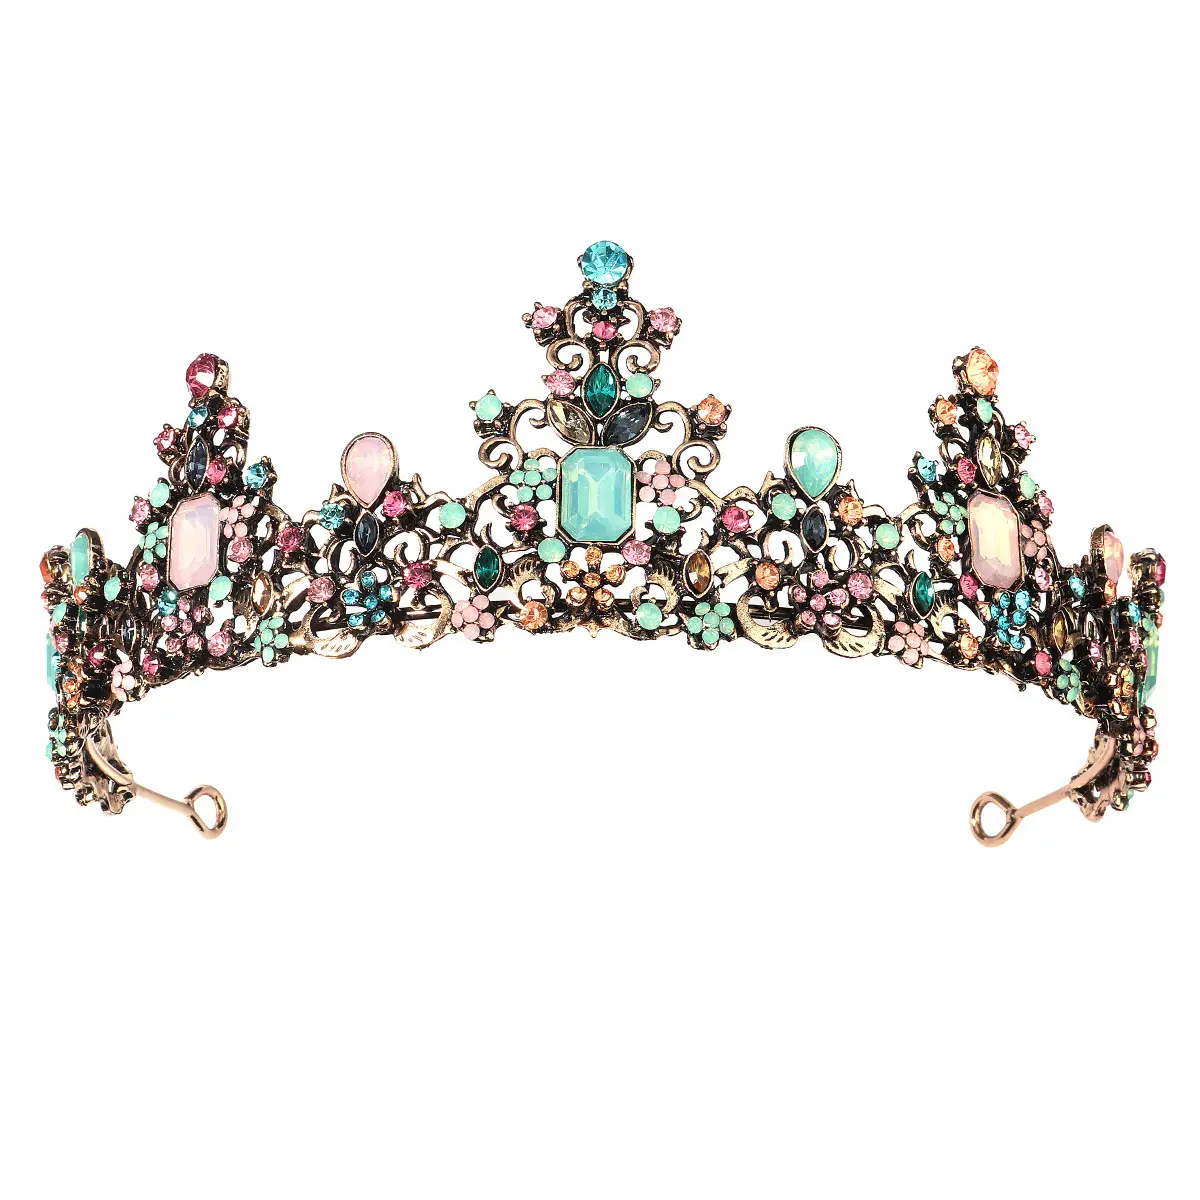 New Design Alloy Rhinestone Crown Wedding Crown Tiara Crystal Party Supplies For Wedding